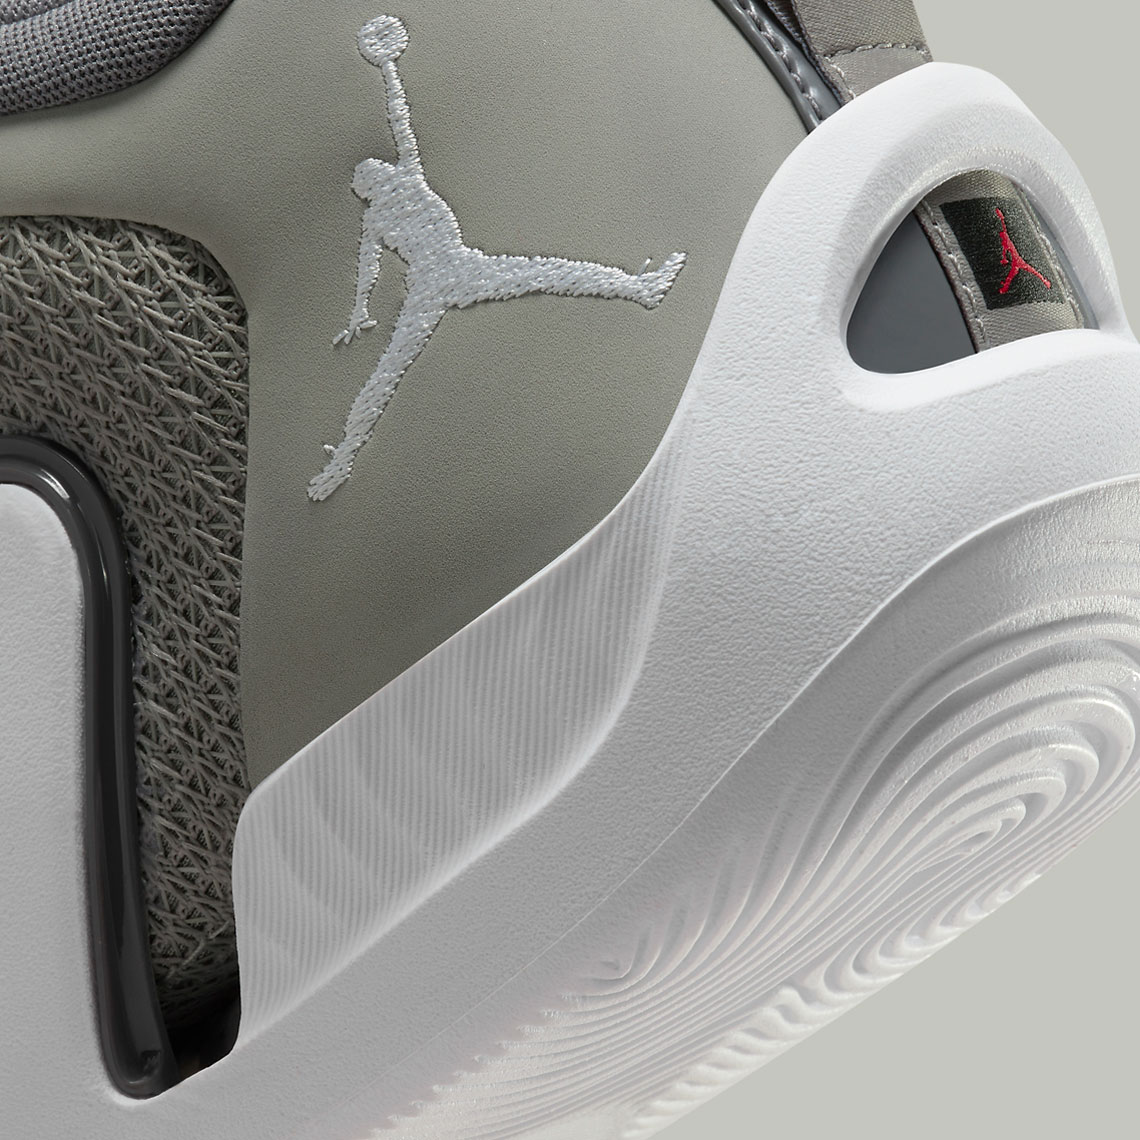 Jordan Brand will be debuting a brand new Air Jordan XX8 model